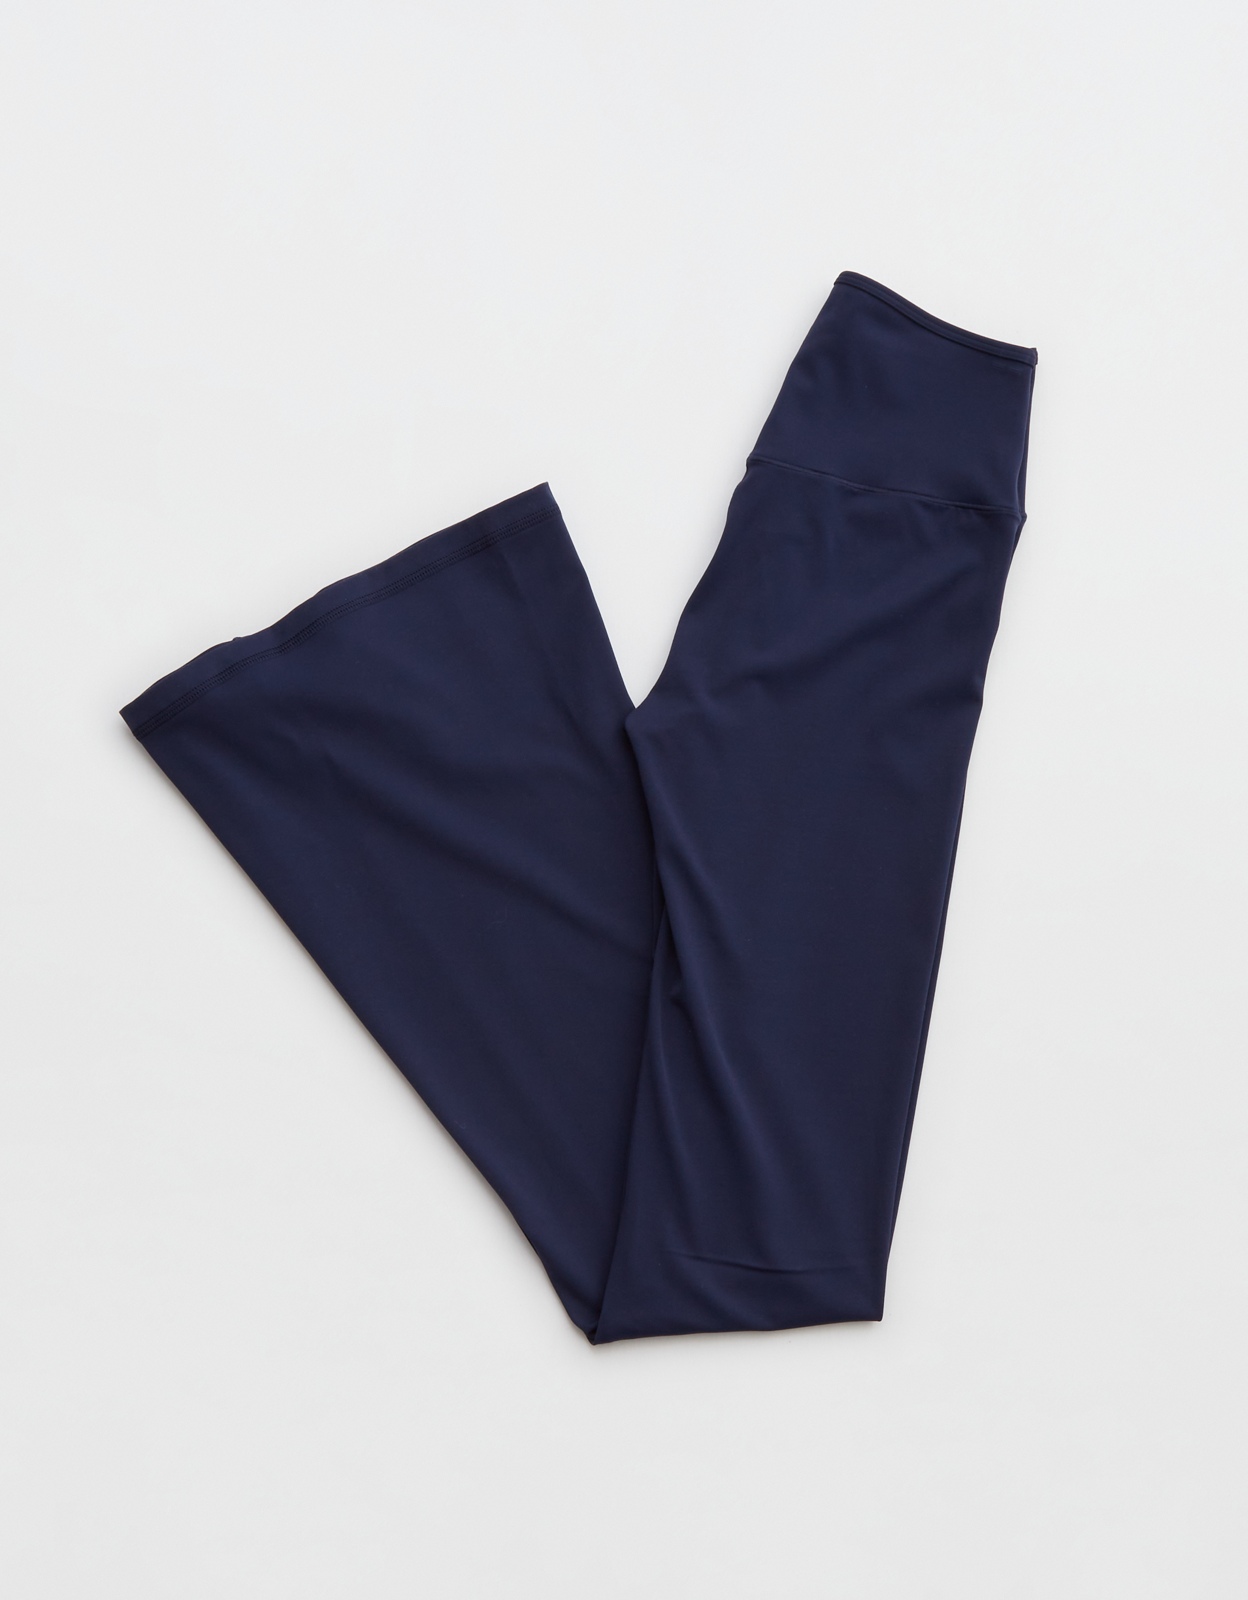 Aerie navy dark blue offline high waisted leggings - Depop